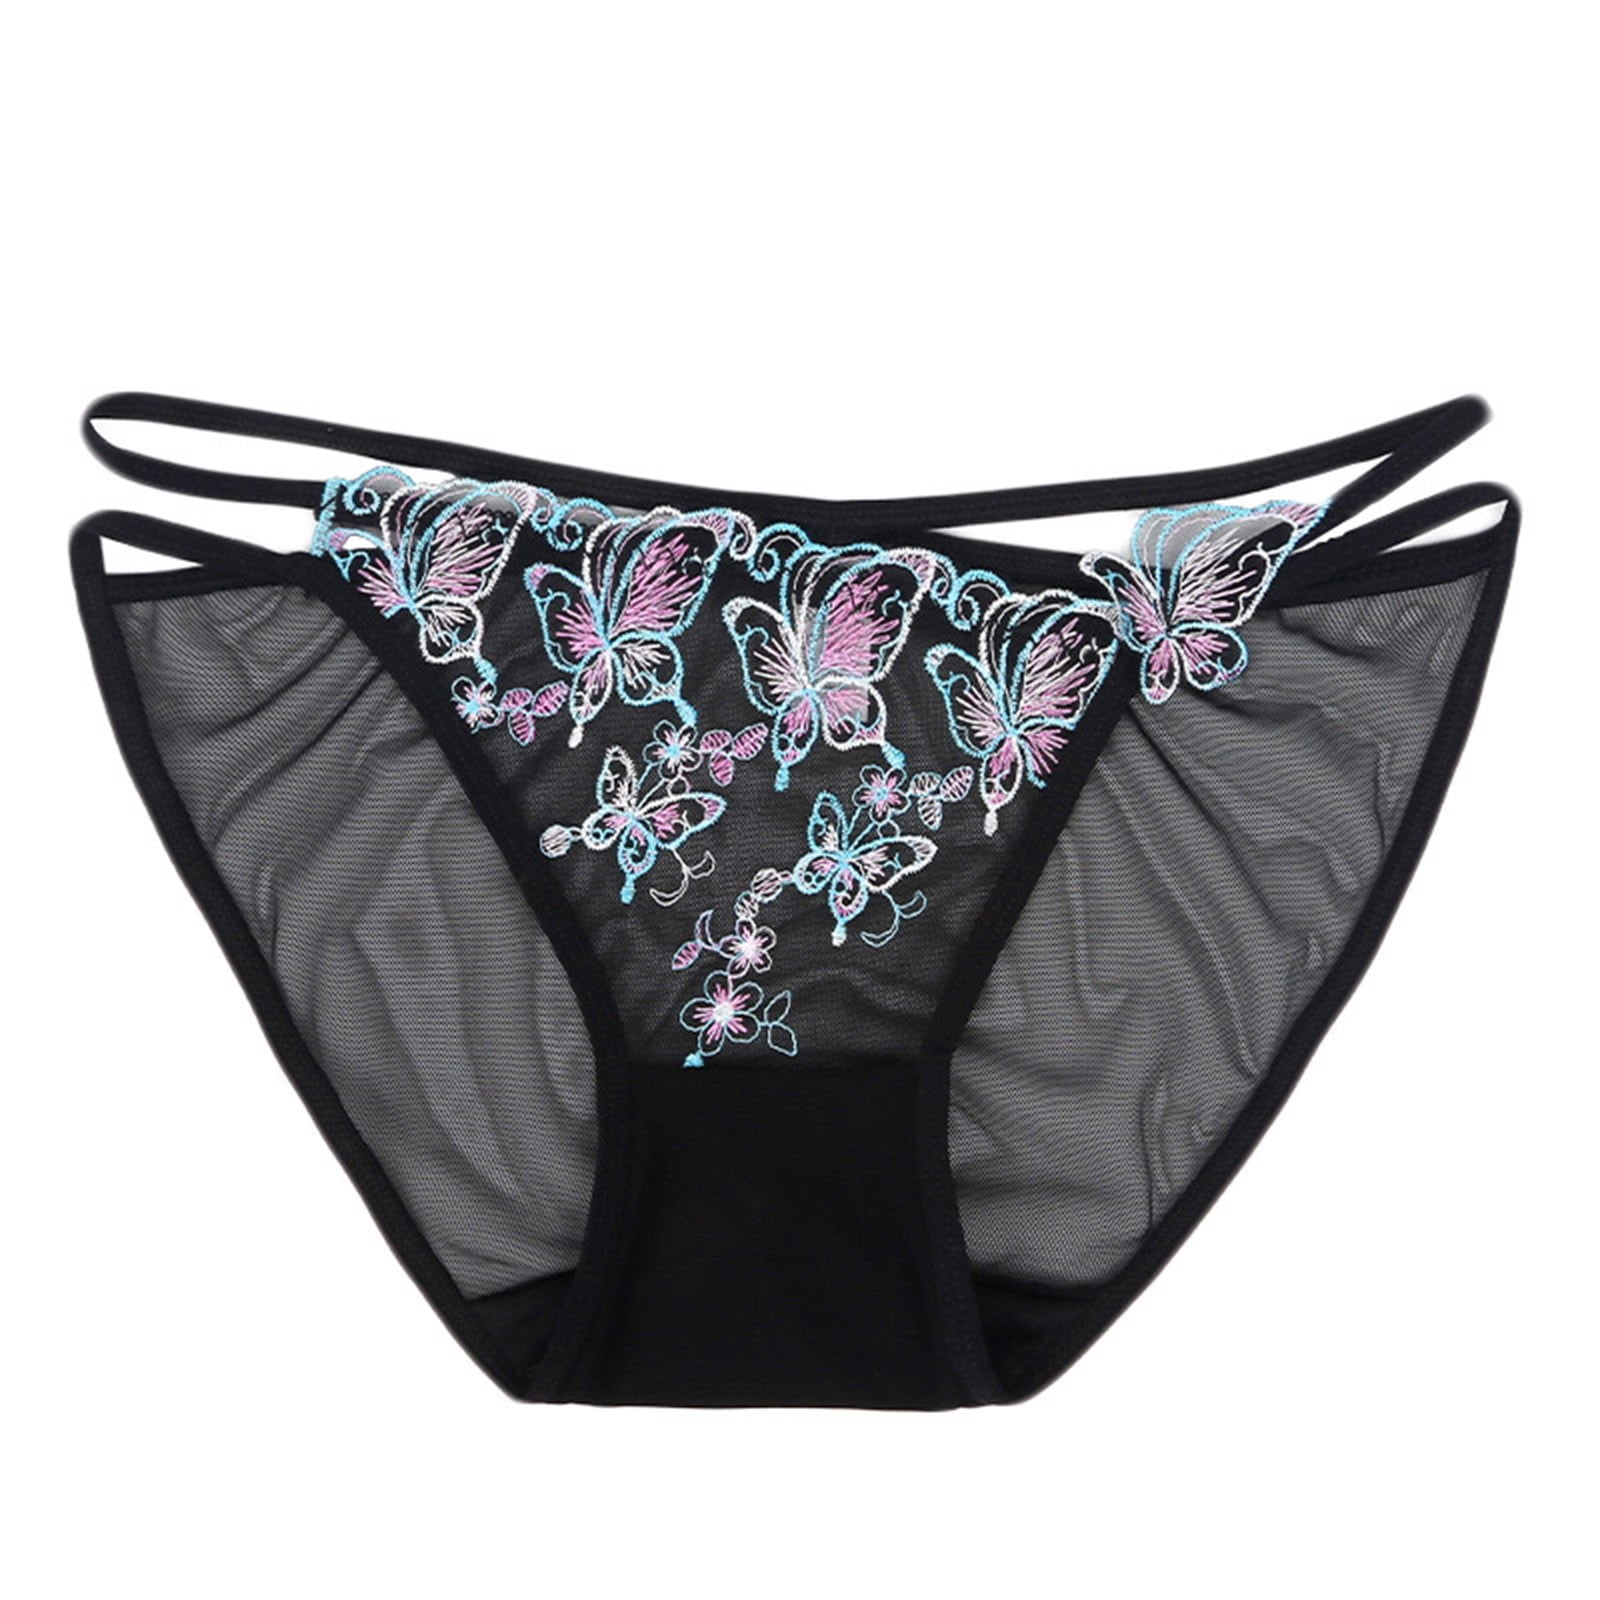 Underwear For Women Clearance Under $5,AXXD Cutut Lace Underwear Briefs  Panties Floral Hollow Out Lingerie Underpants Beige 6